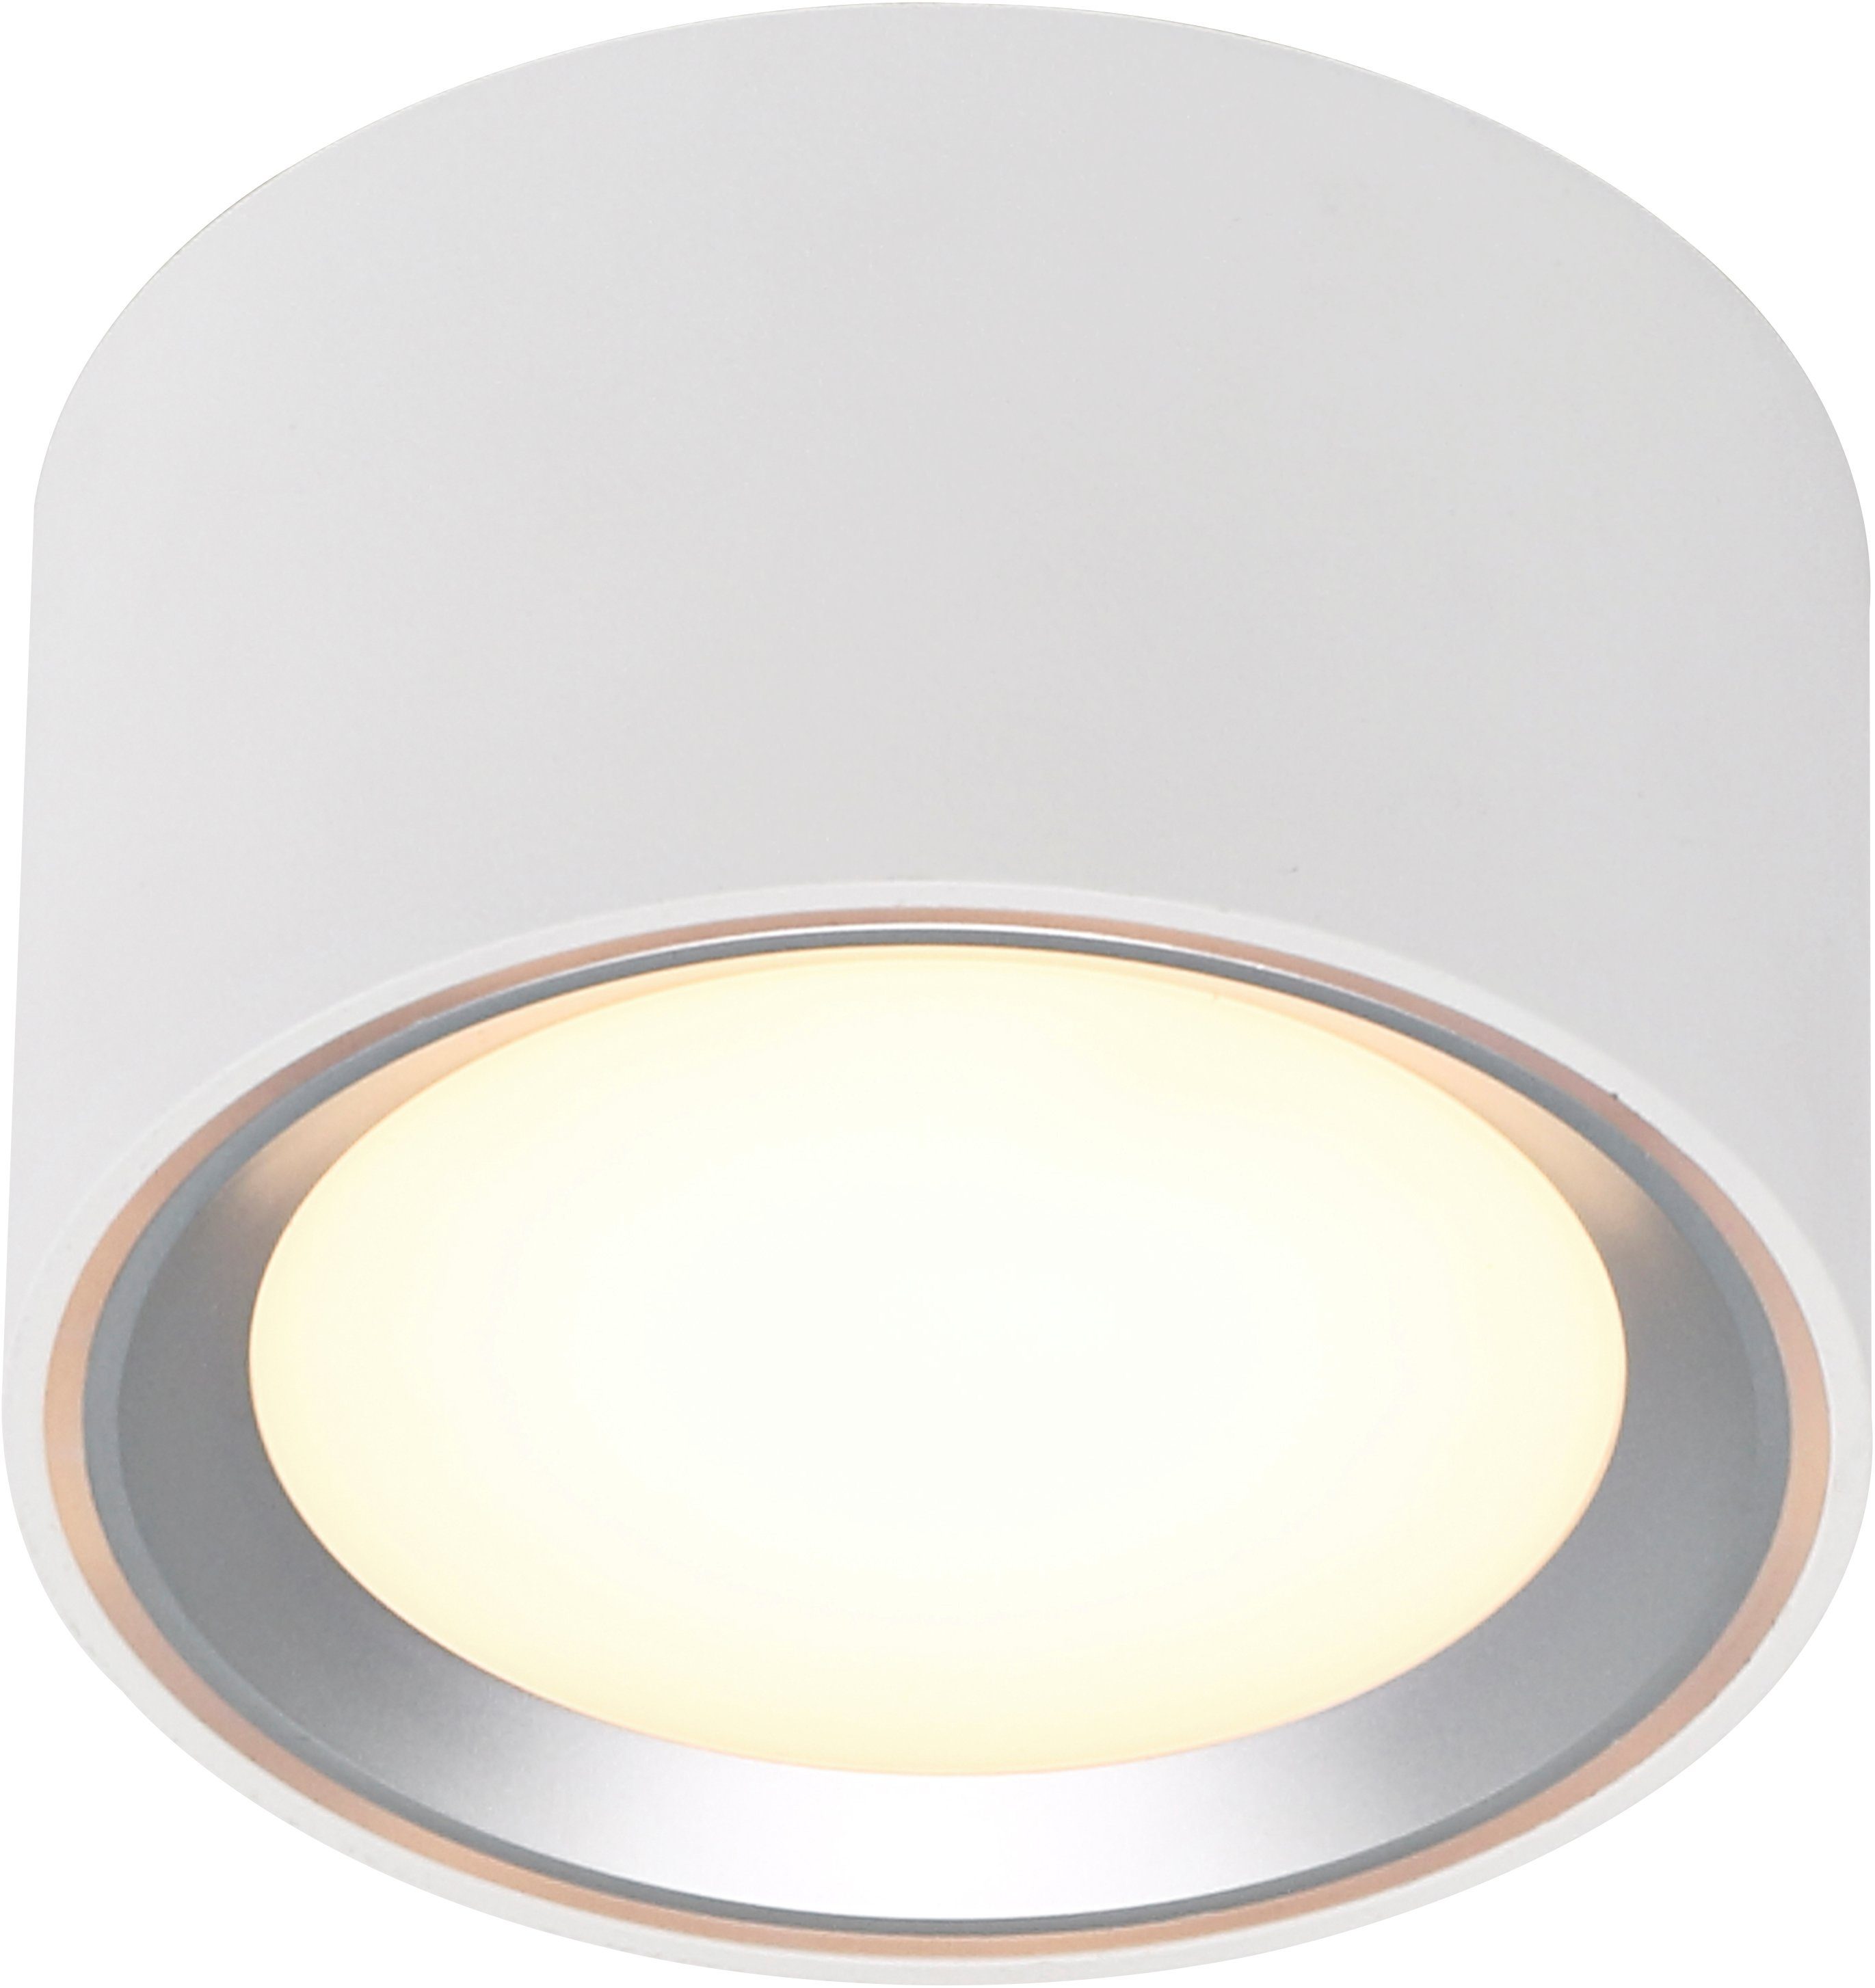 Fallon, fest unauffälliges Warmweiß, LED Deckenspot Dimmfunktion, Dezentes, LED Deckenlampe, integriert, Deckenleuchte, LED Nordlux LED Design